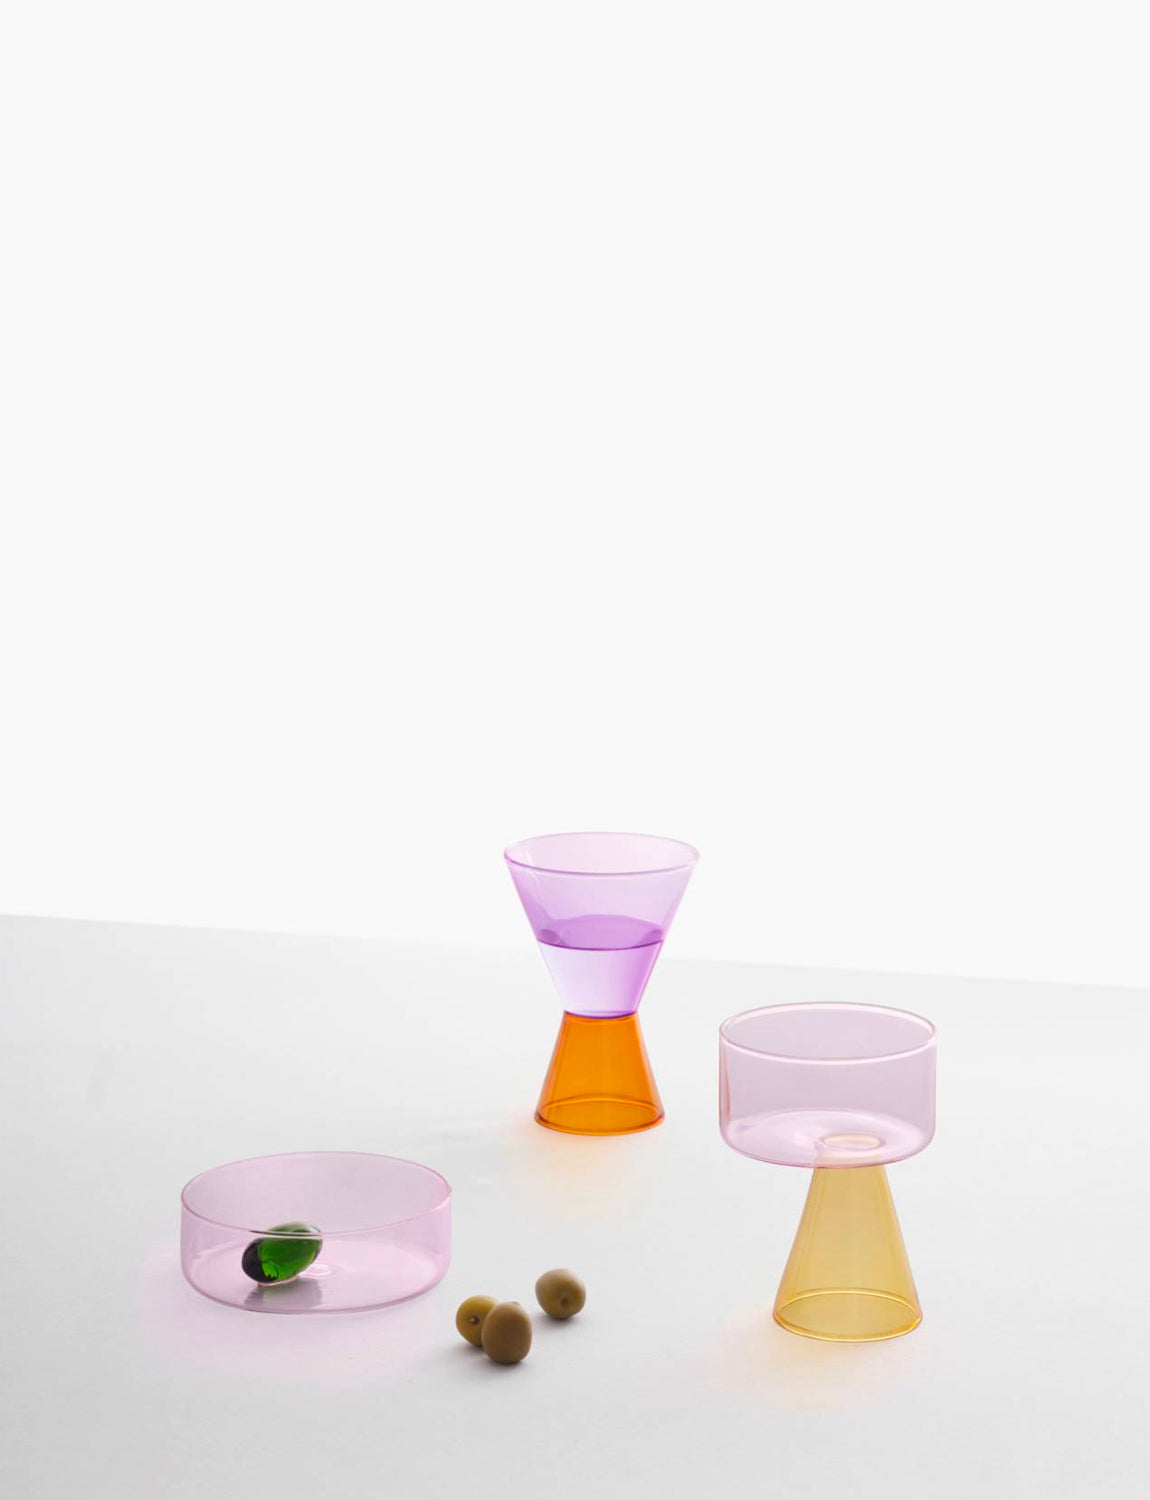 Ichendorf Travasi Glass, amber-liliac